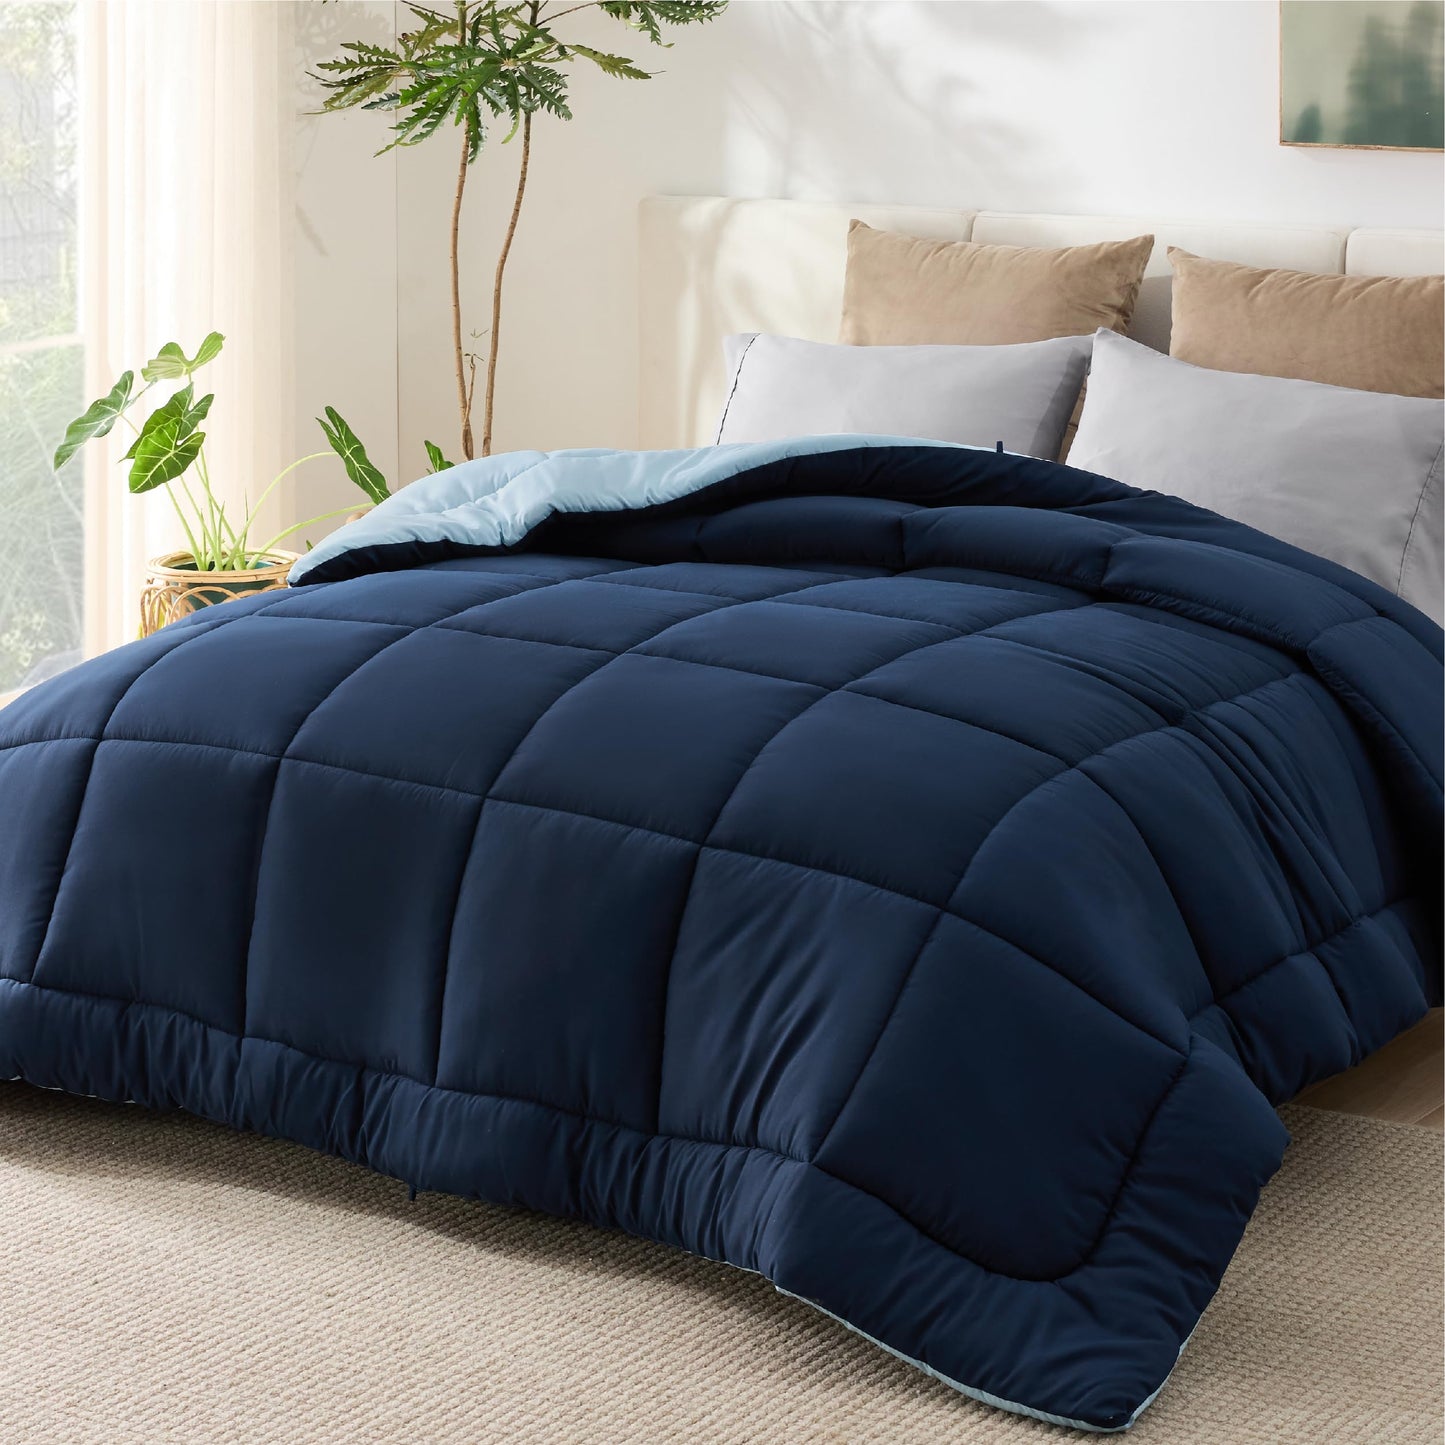 Bedsure Twin XL Comforter Duvet Insert Dorm Bedding - Blue/Light Blue Extra Long Twin Comforter, Quilted All Season Duvet with Corner Tabs